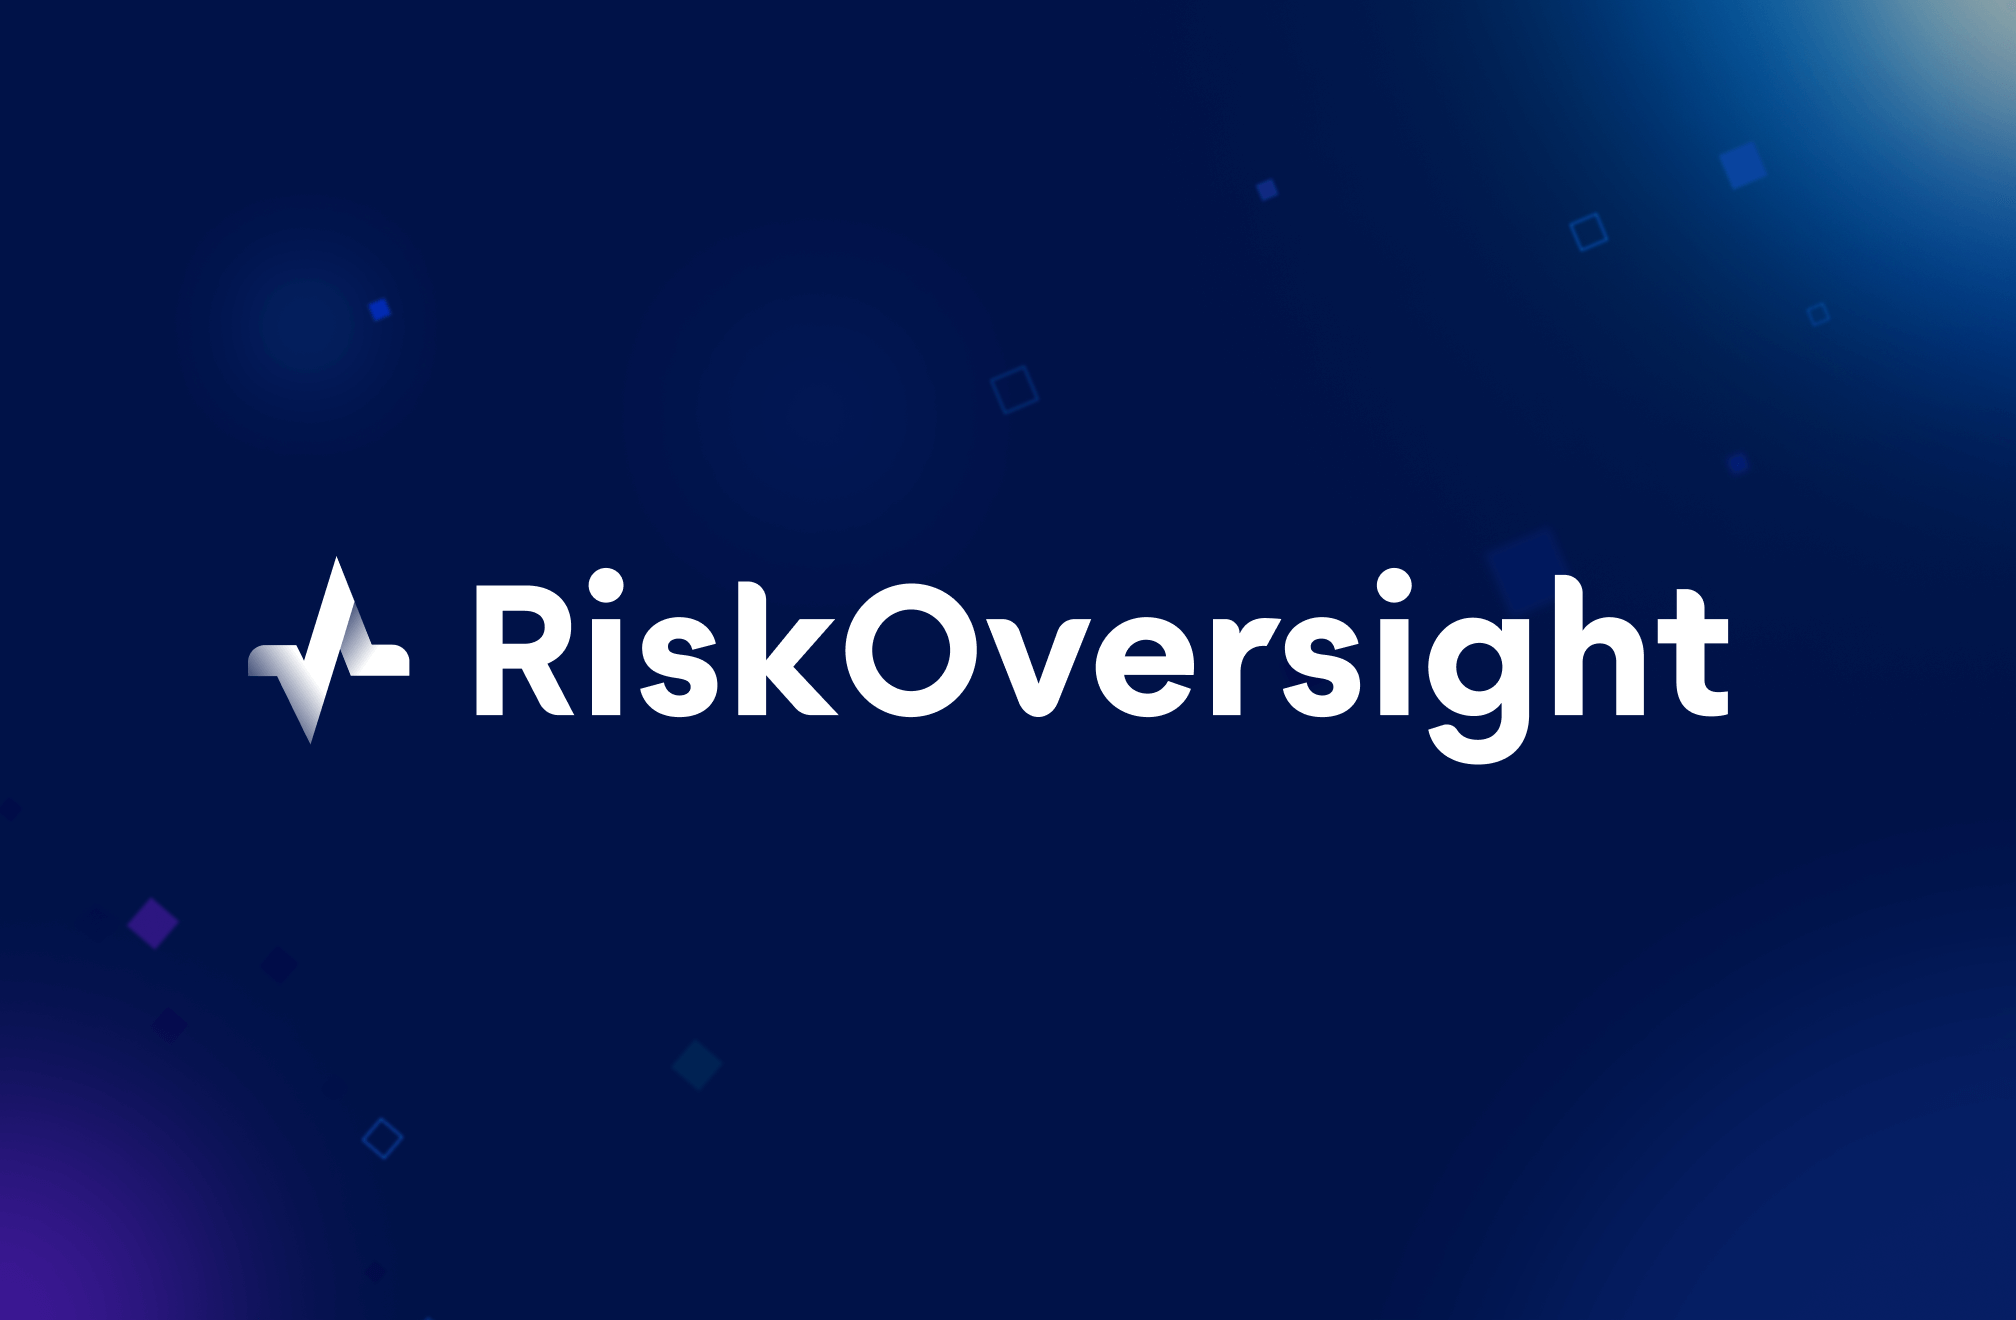 Proactively Manage Enterprise Risk with RiskOversight KRI